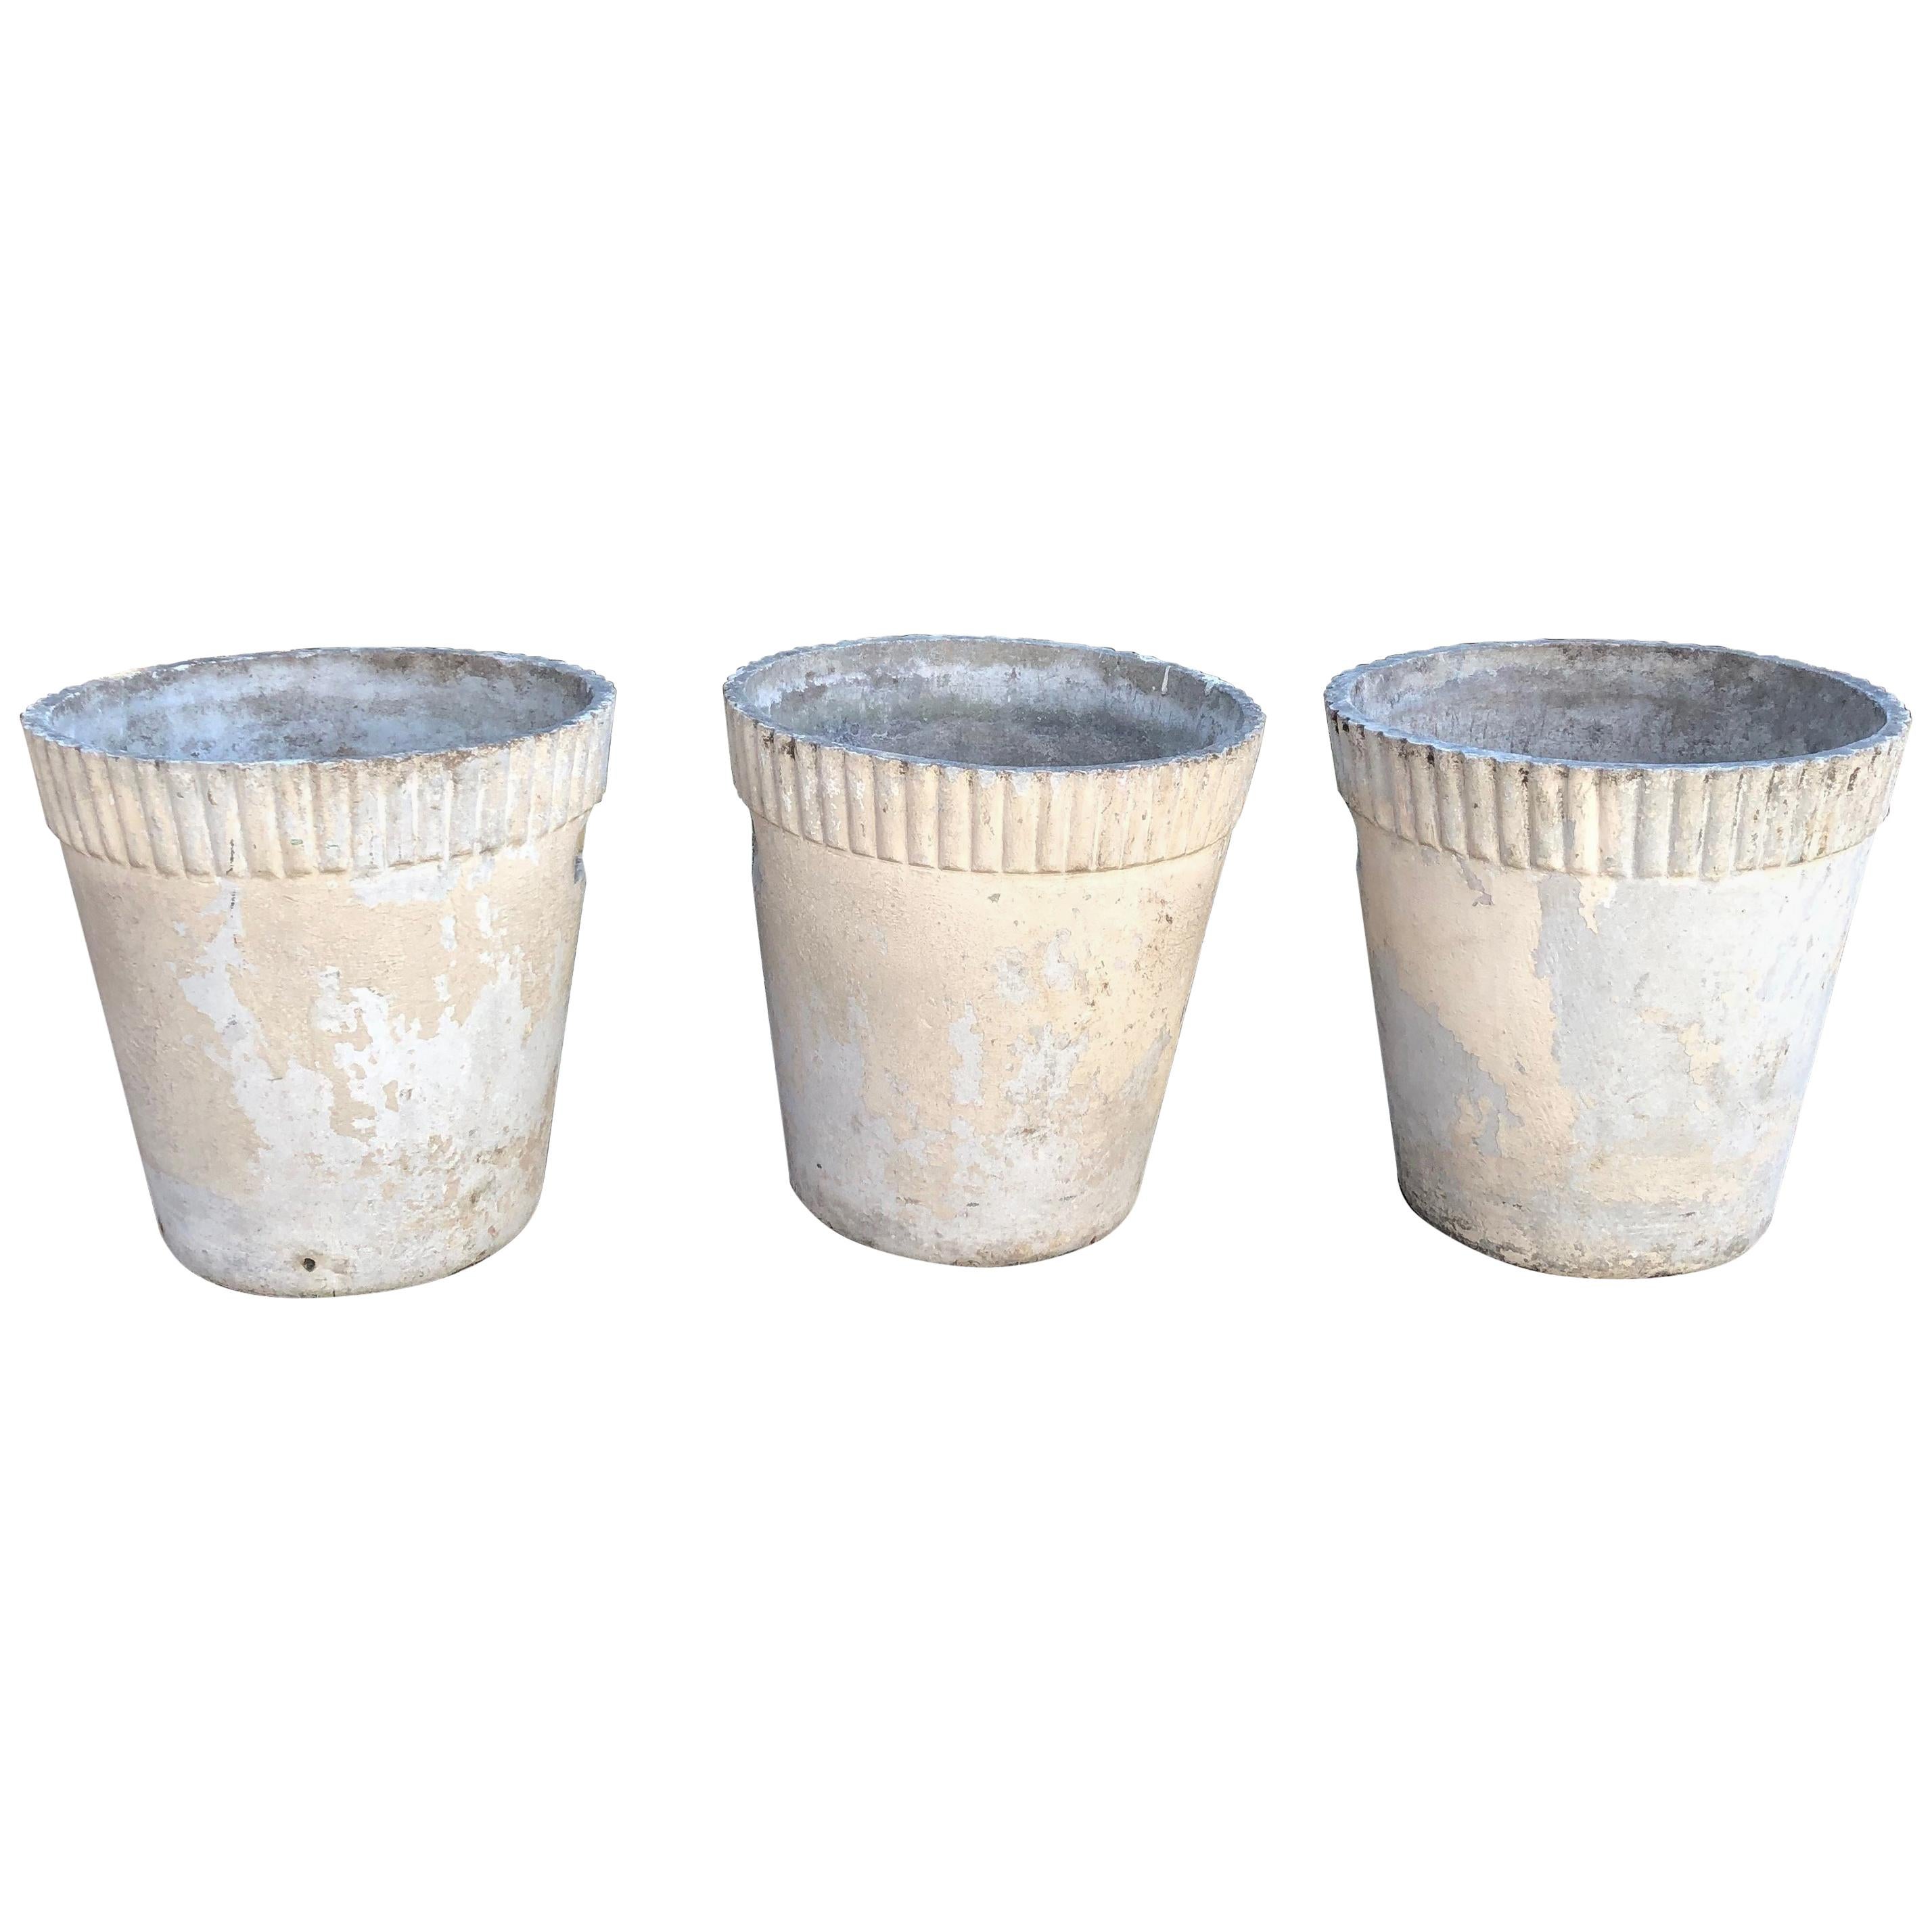 Set of Three Medium Flower Pot Form Planters Designed by Willy Guhl